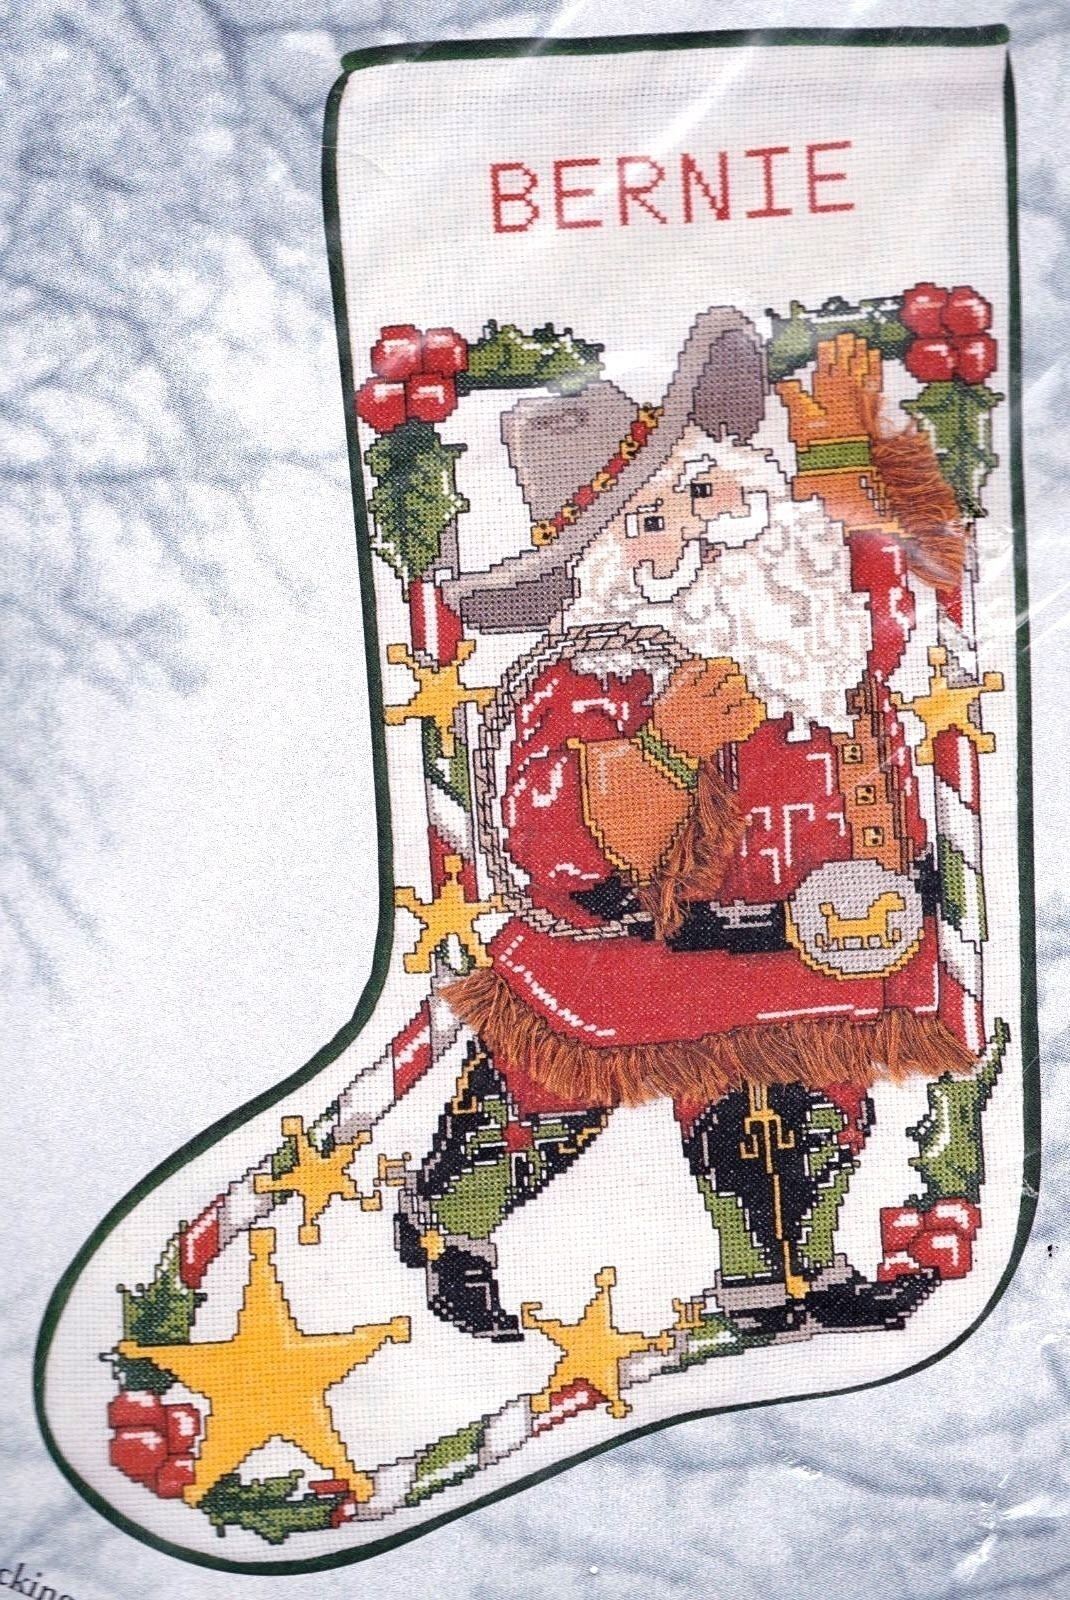 DIY Candamar Cowboy Santa Christmas Counted Cross Stitch Stocking Kit 50822